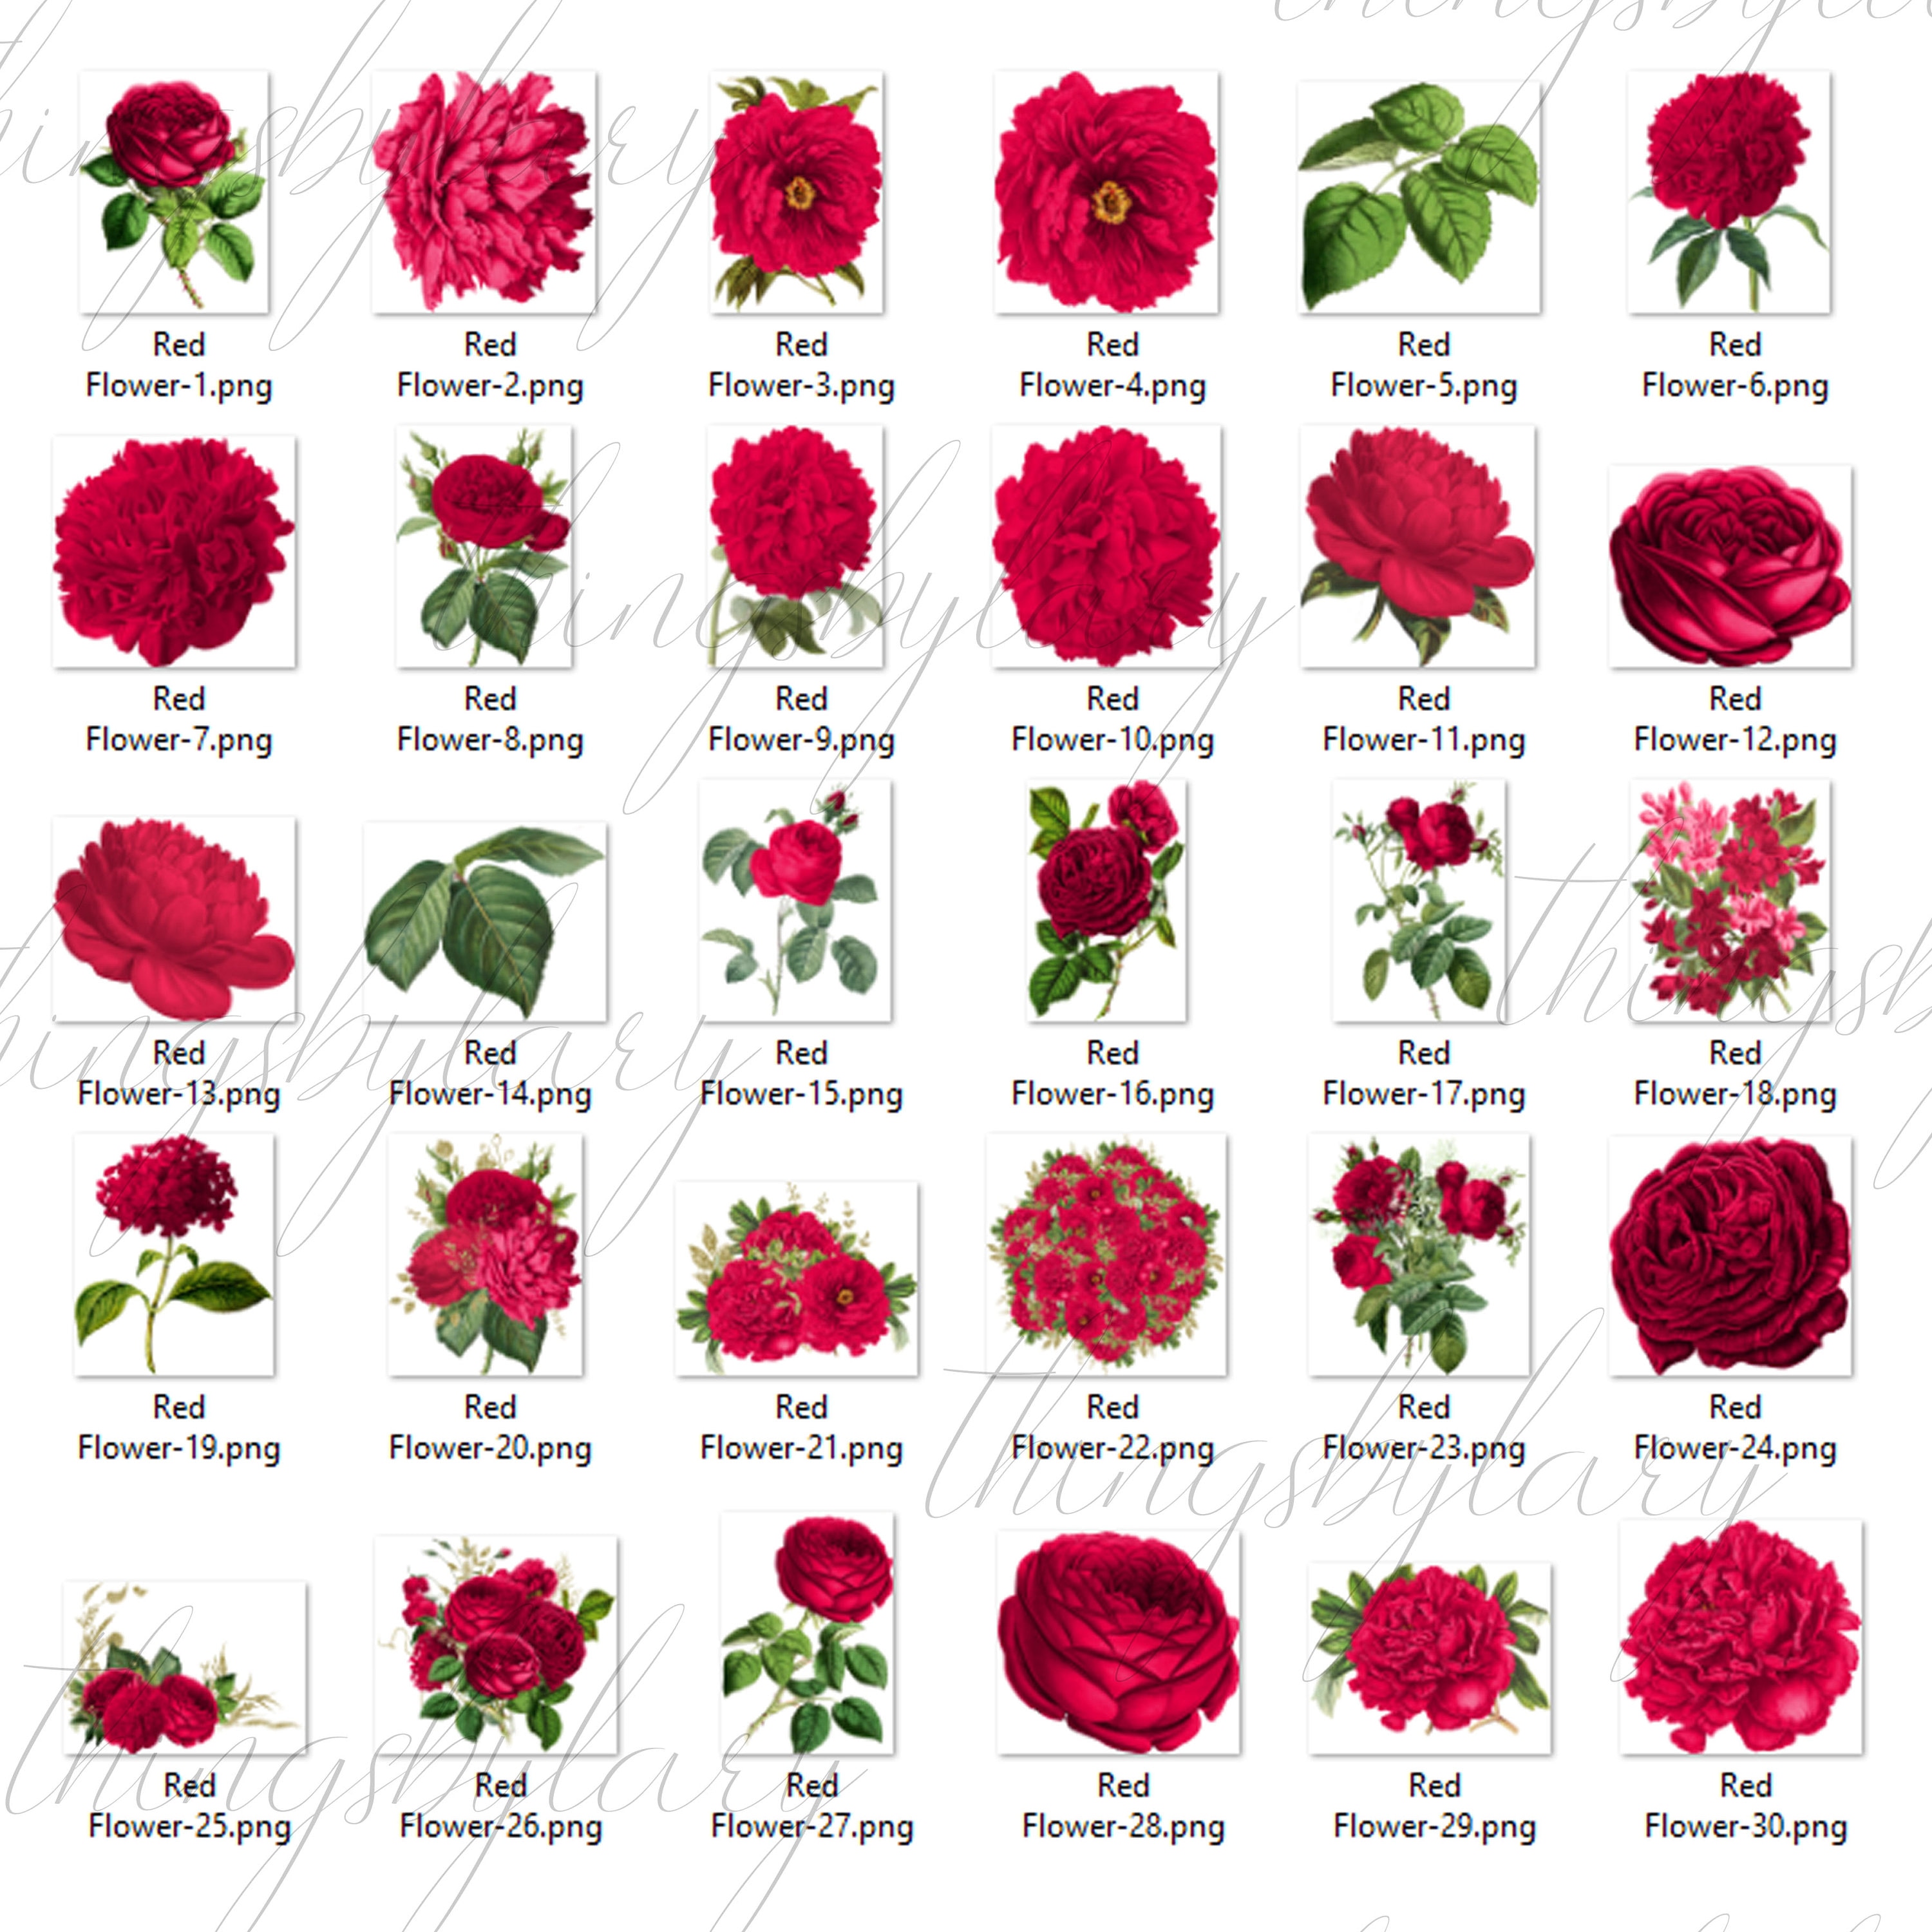 30 Red Flowers Digital Images PNG 300 Dpi Instant Download